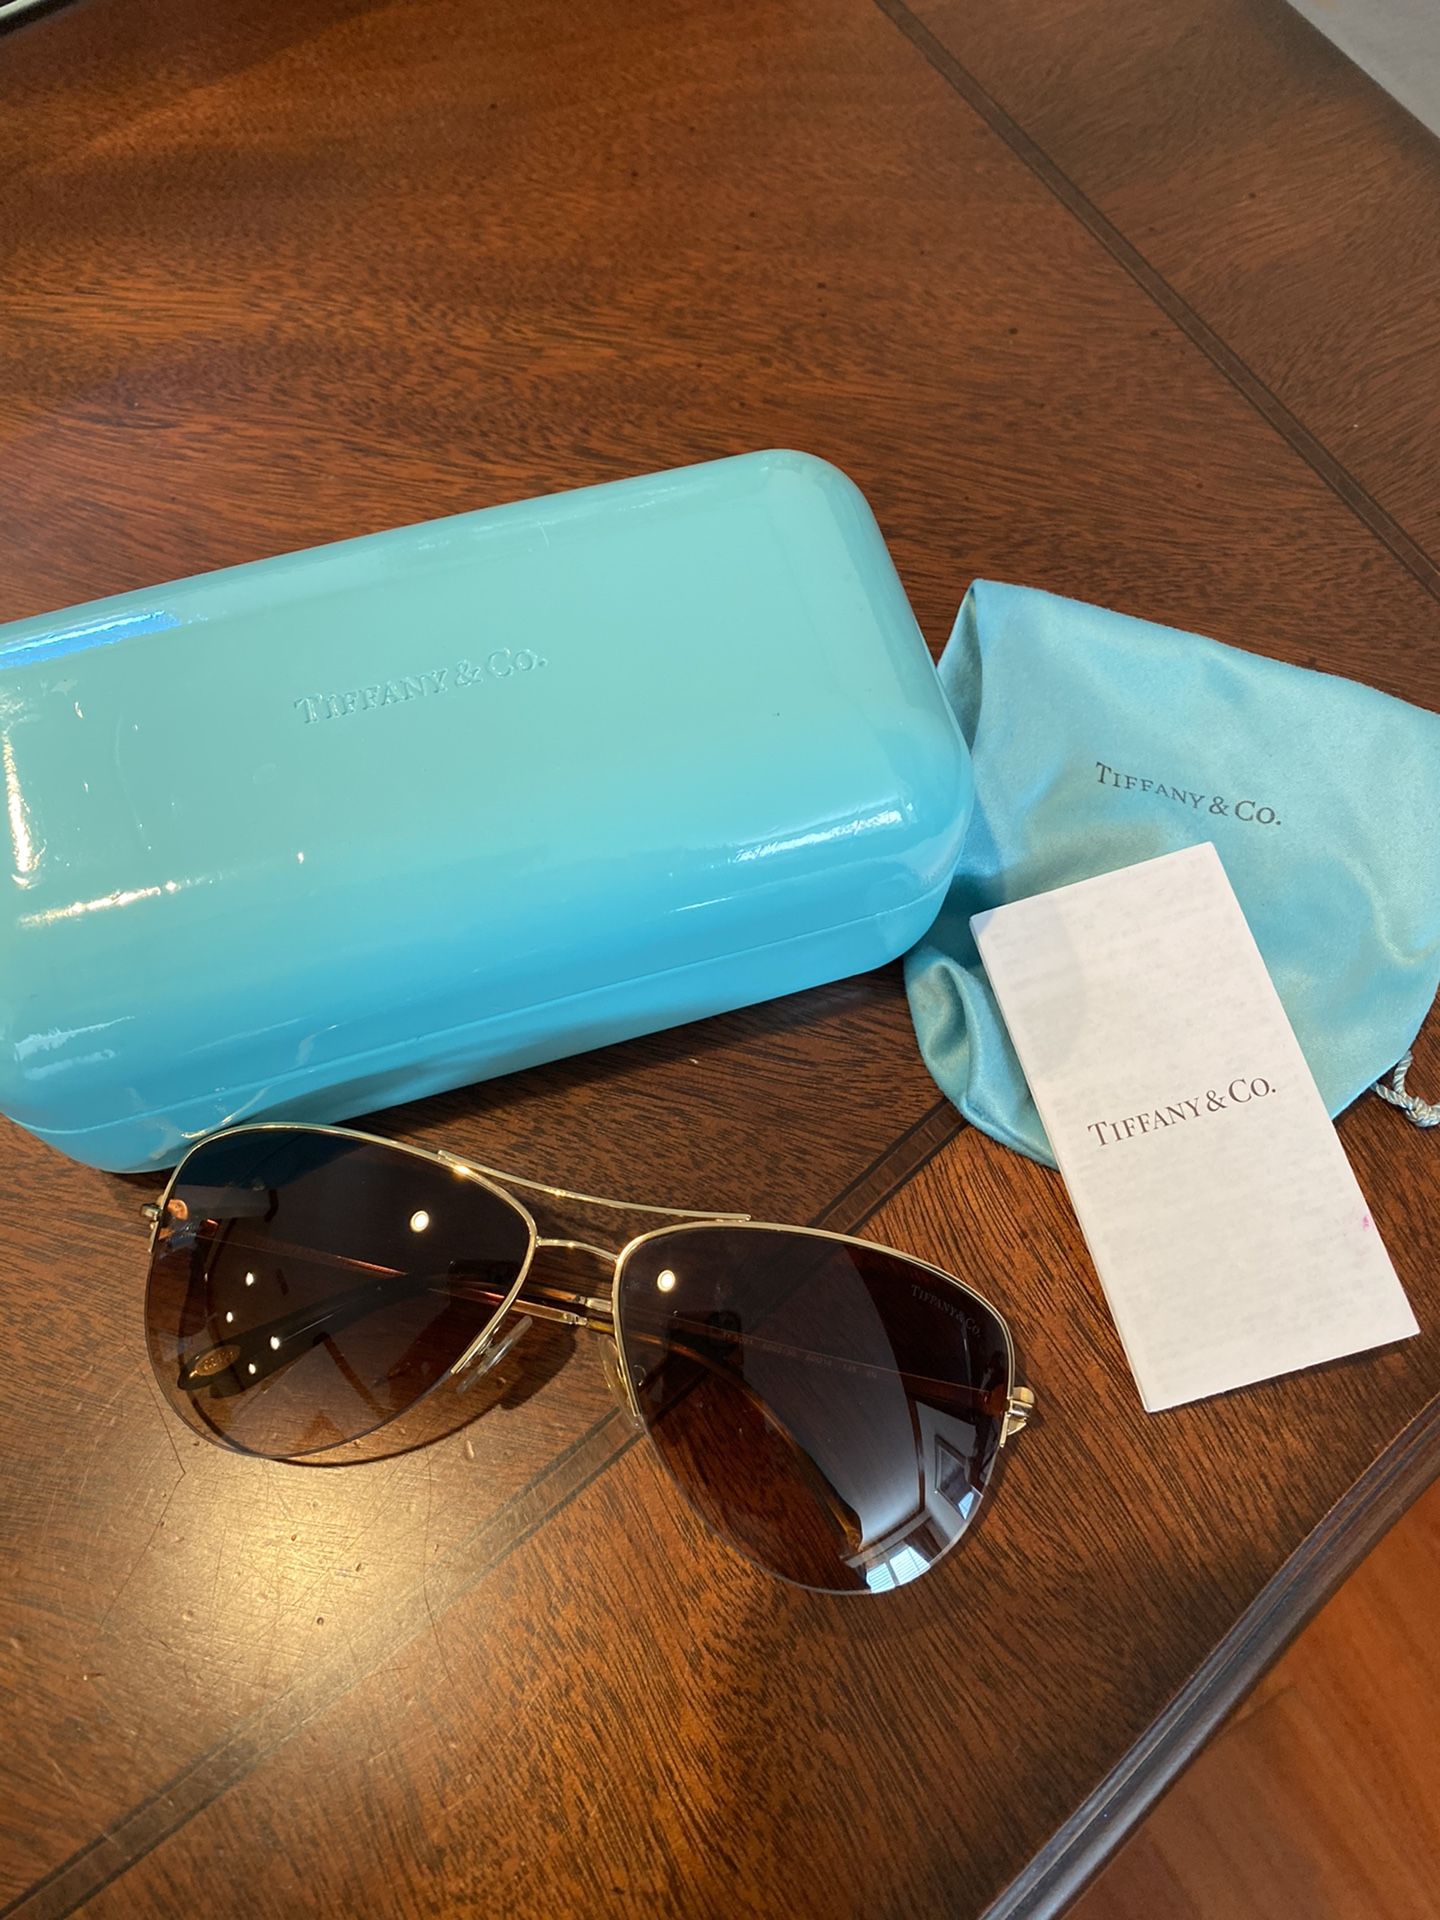 100% authentic Tiffany & Co. sunglasses